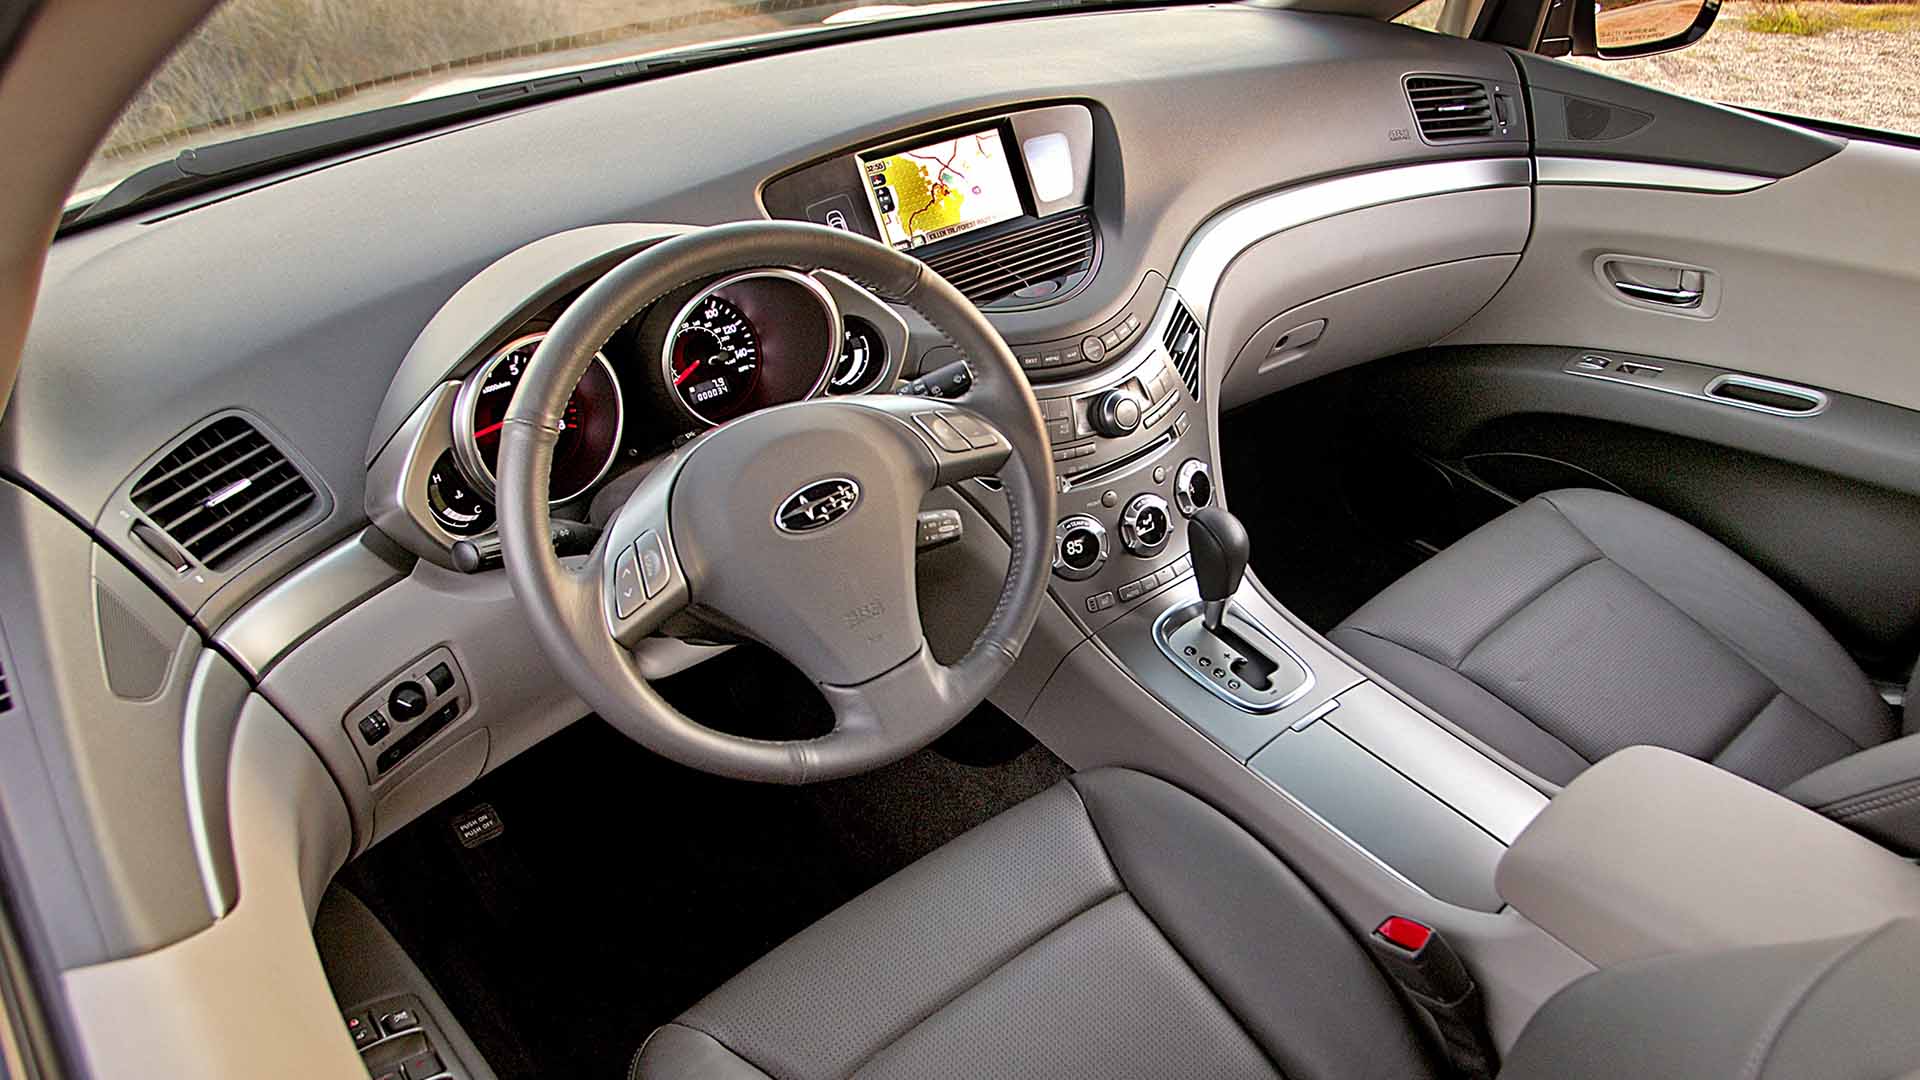 Subaru B9 Tribeca interior